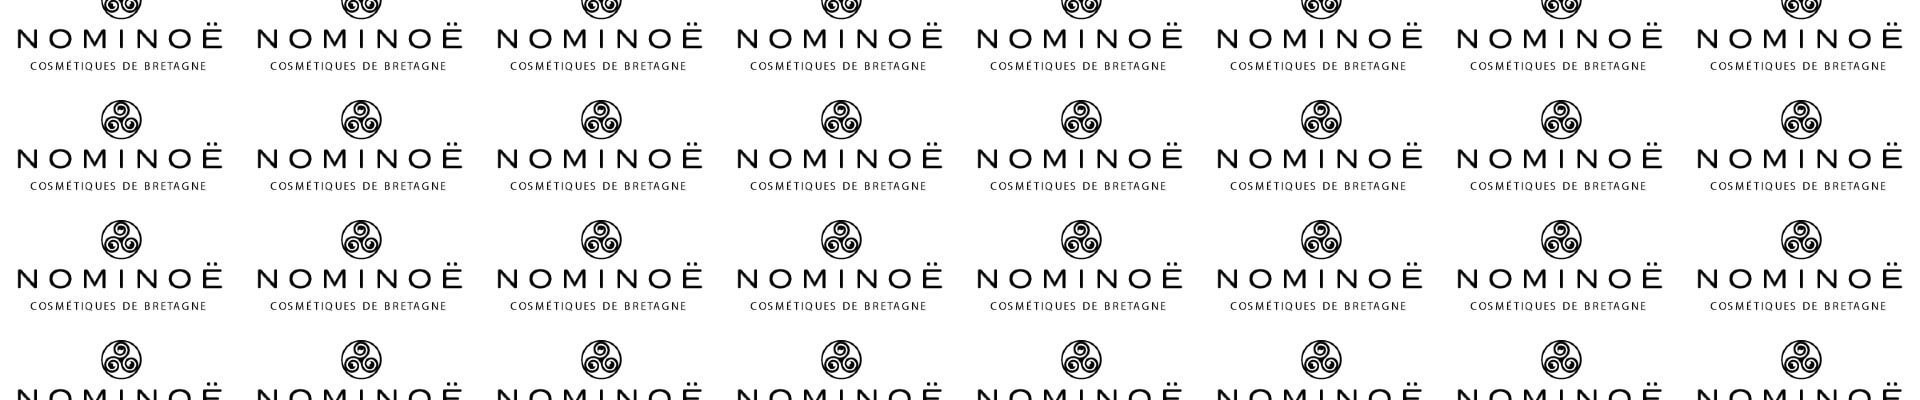 cosmetique-nominoe-bretagne-magasin-bio-janze-005